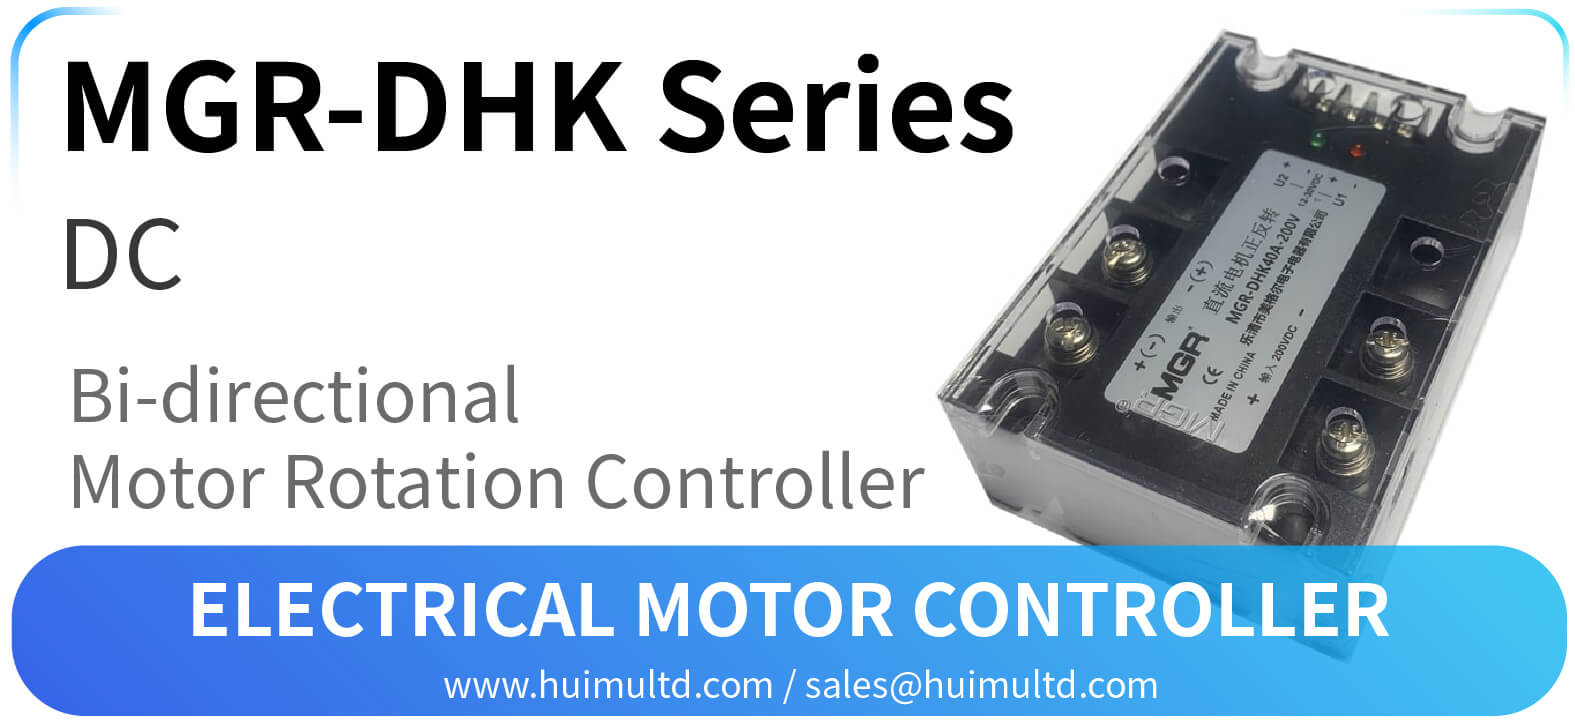 MGR-DHK Series Electrical Motor Controller